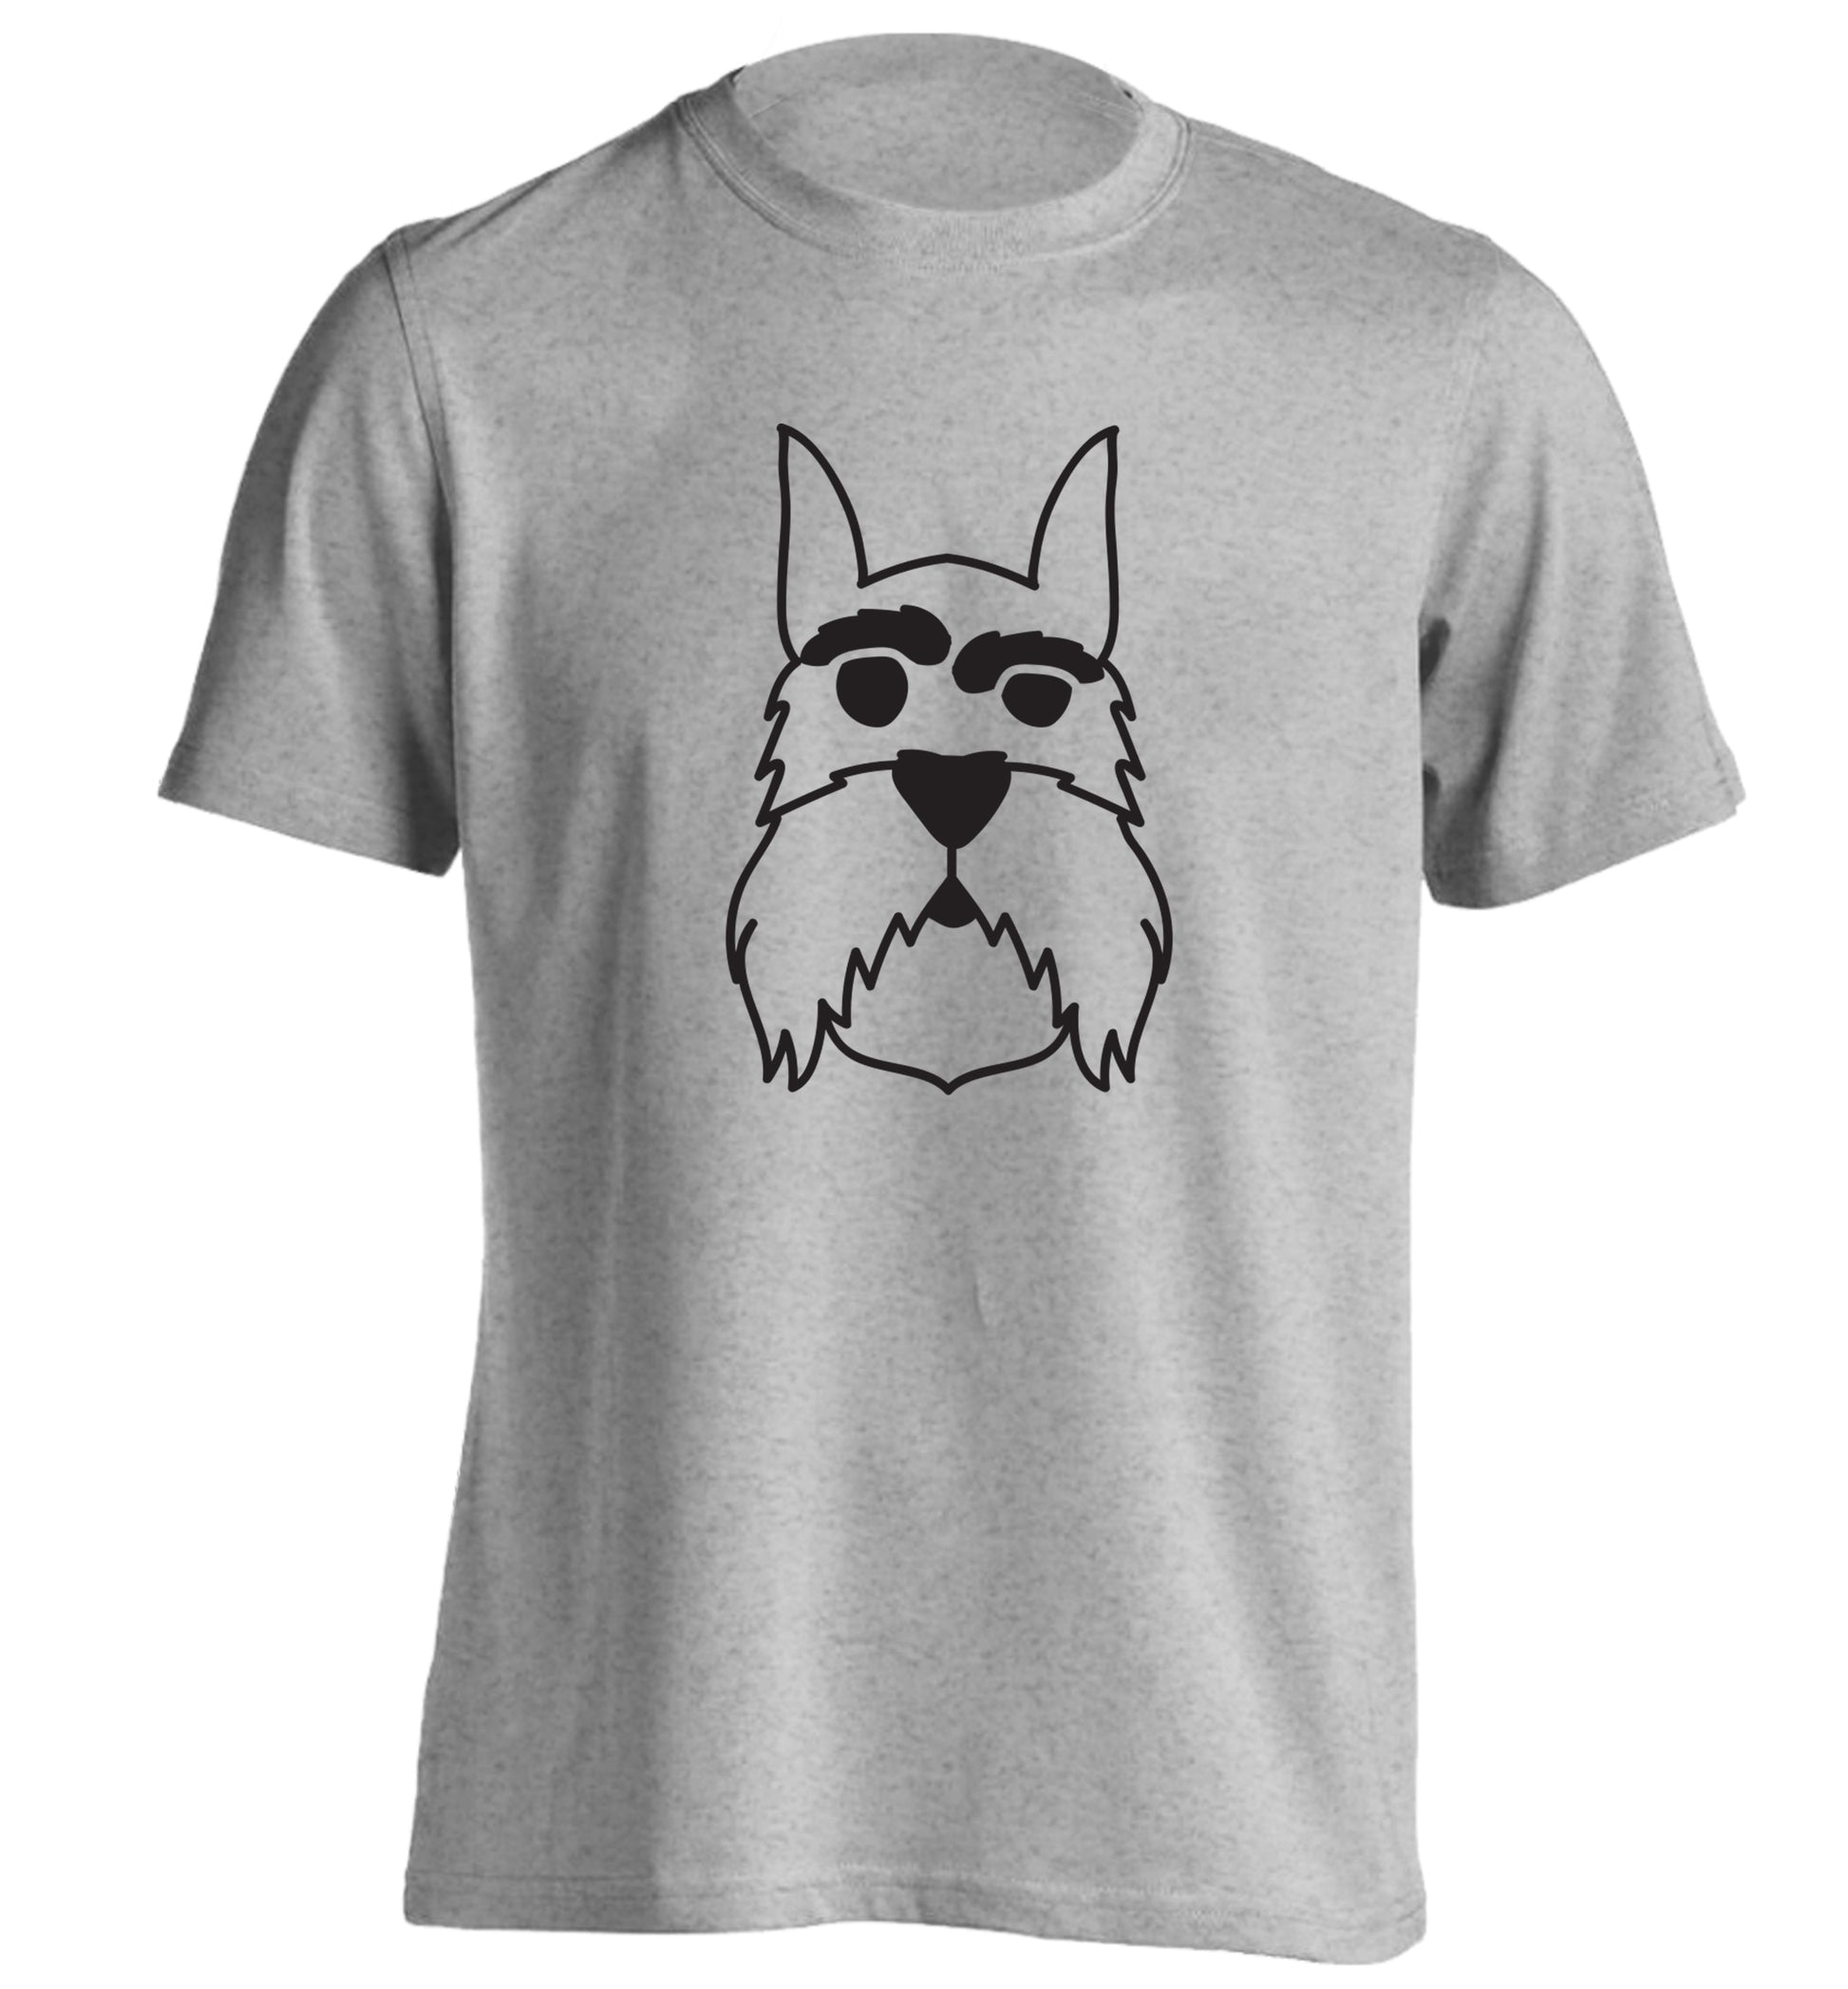 Schnauzer dog illustration adults unisex grey Tshirt 2XL